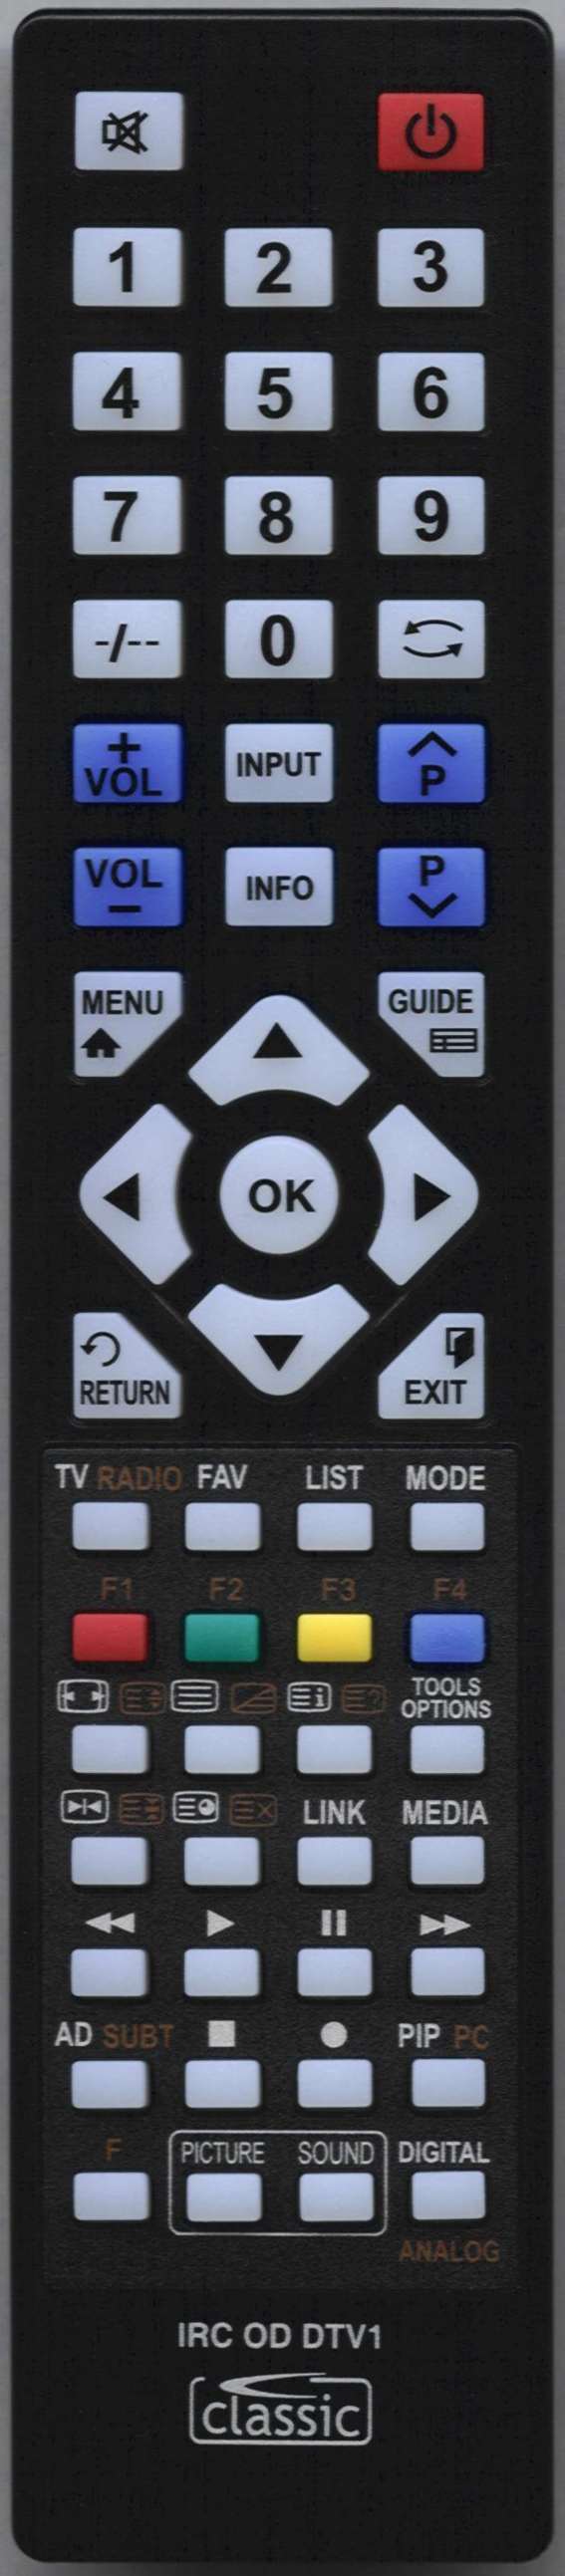 LG 20 LS1RA Remote Control